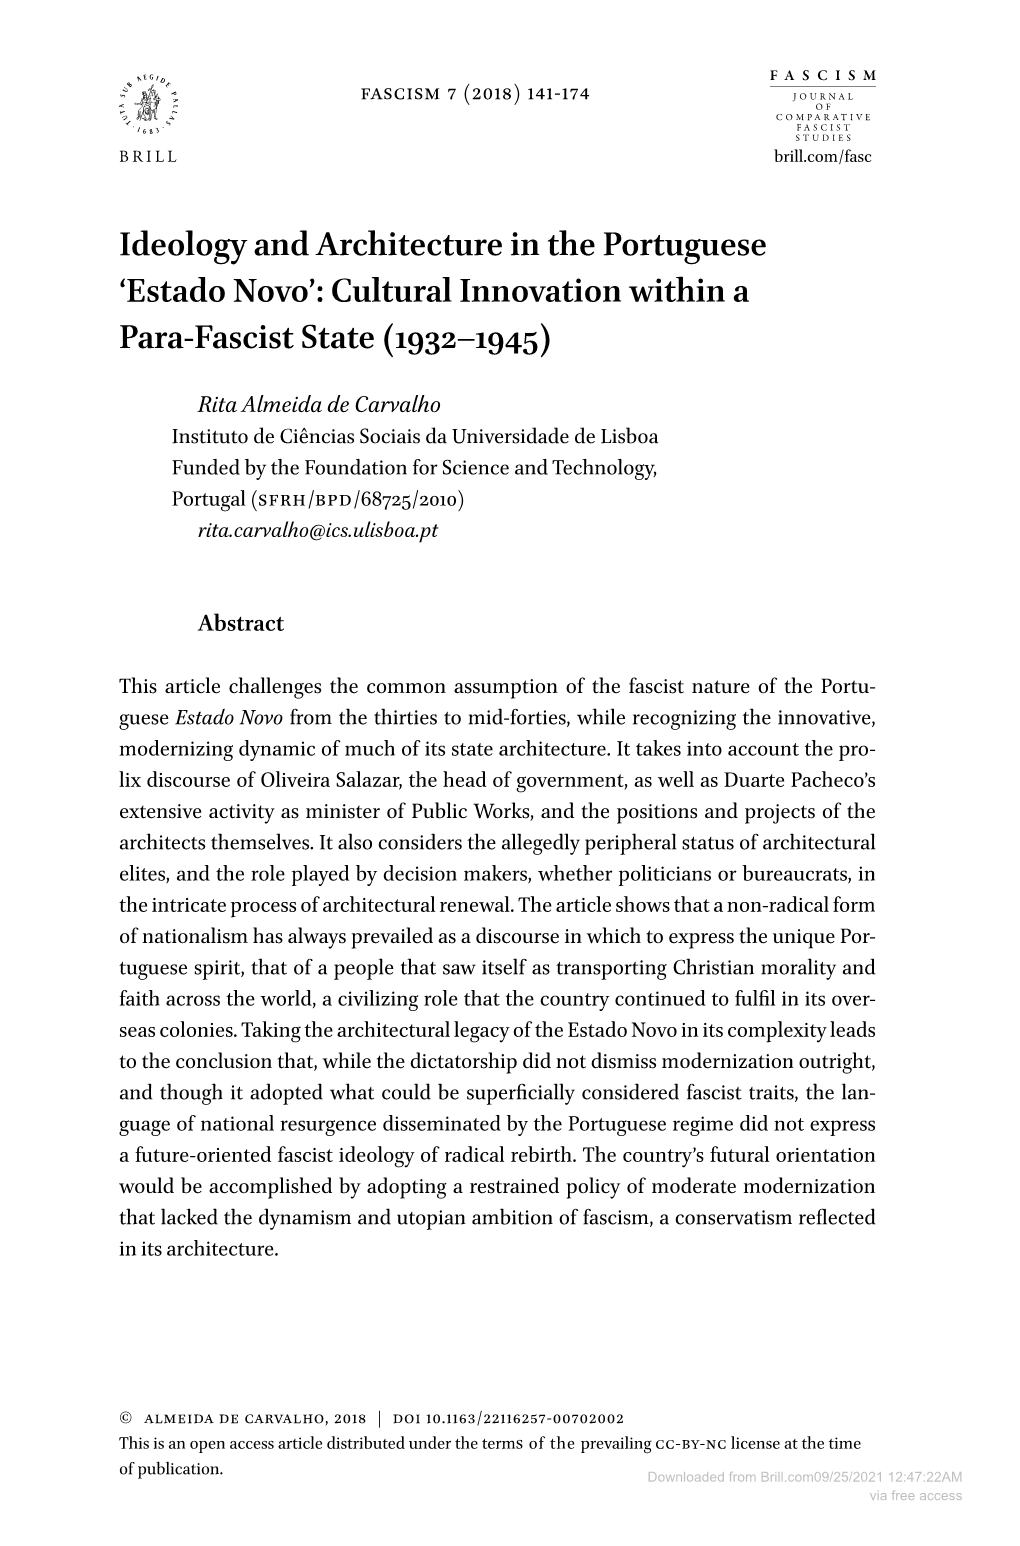 Estado Novo’: Cultural Innovation Within a Para-Fascist State (1932–1945)